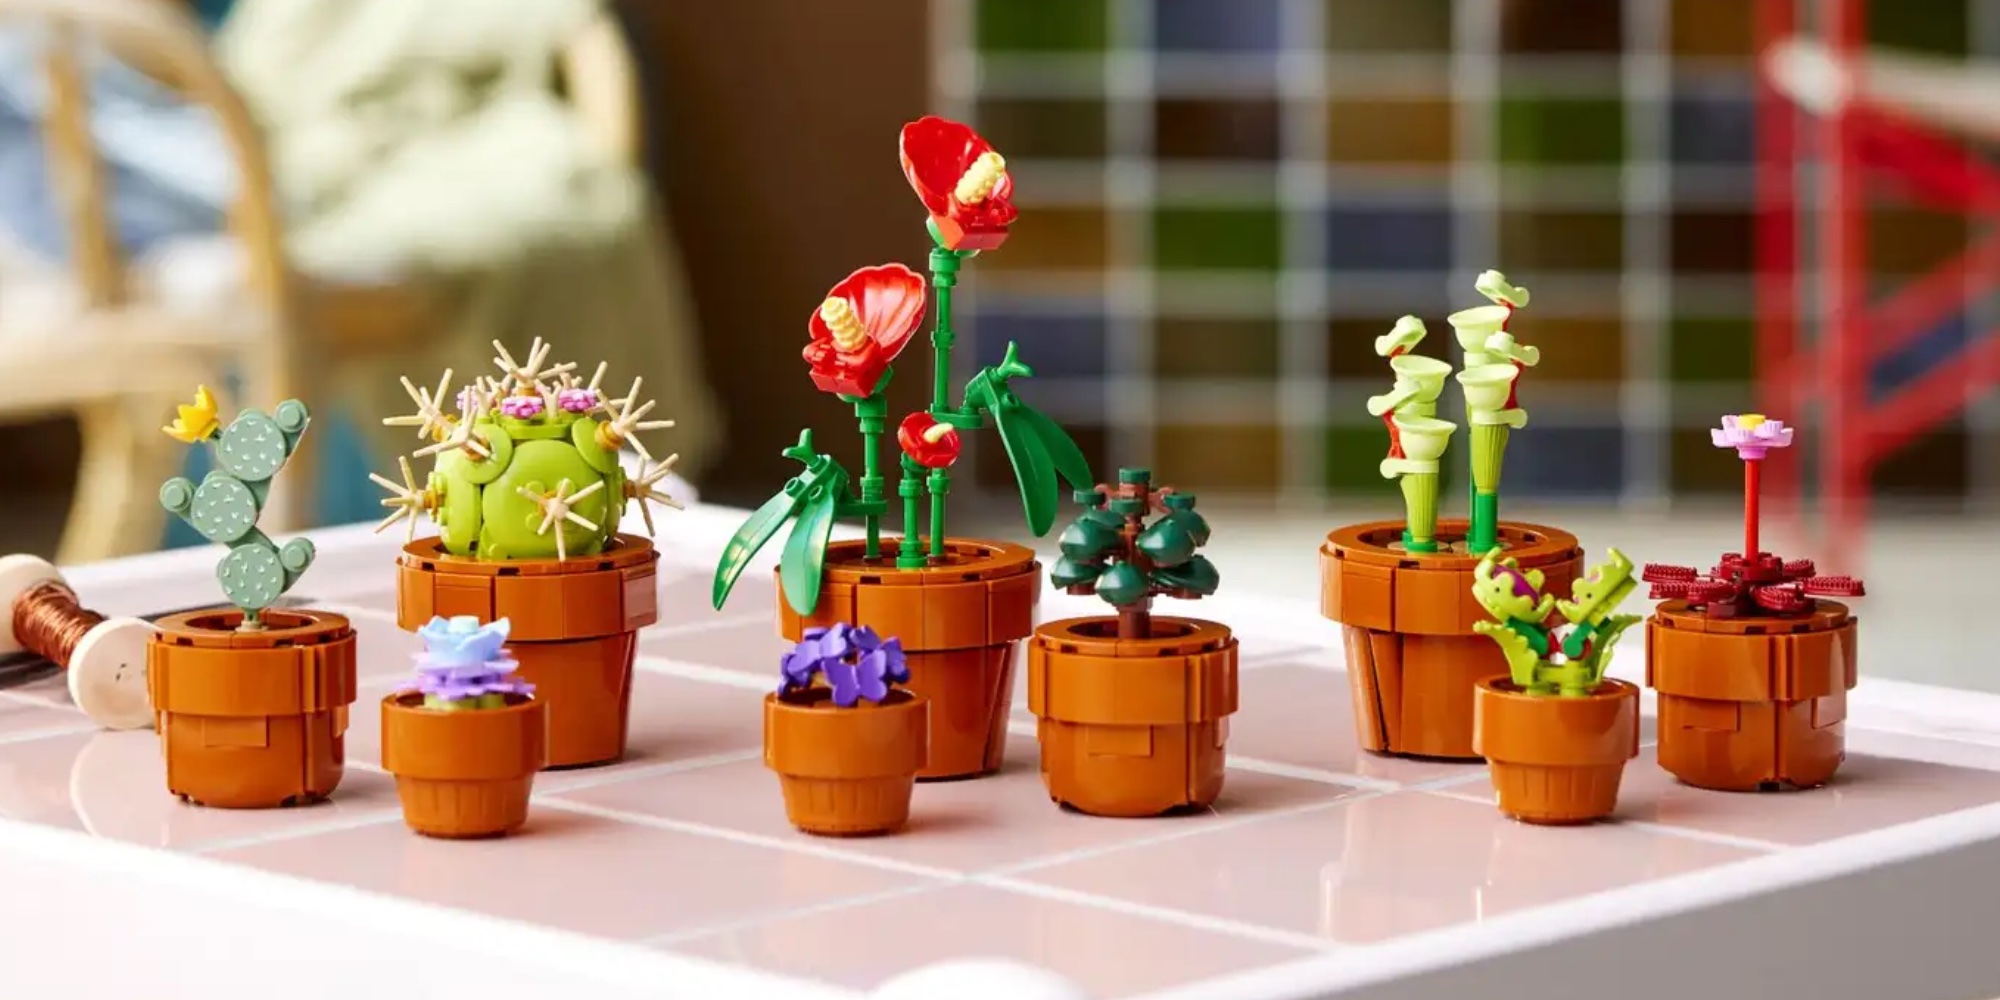 LEGO Tiny Plants revealed as set number 10329